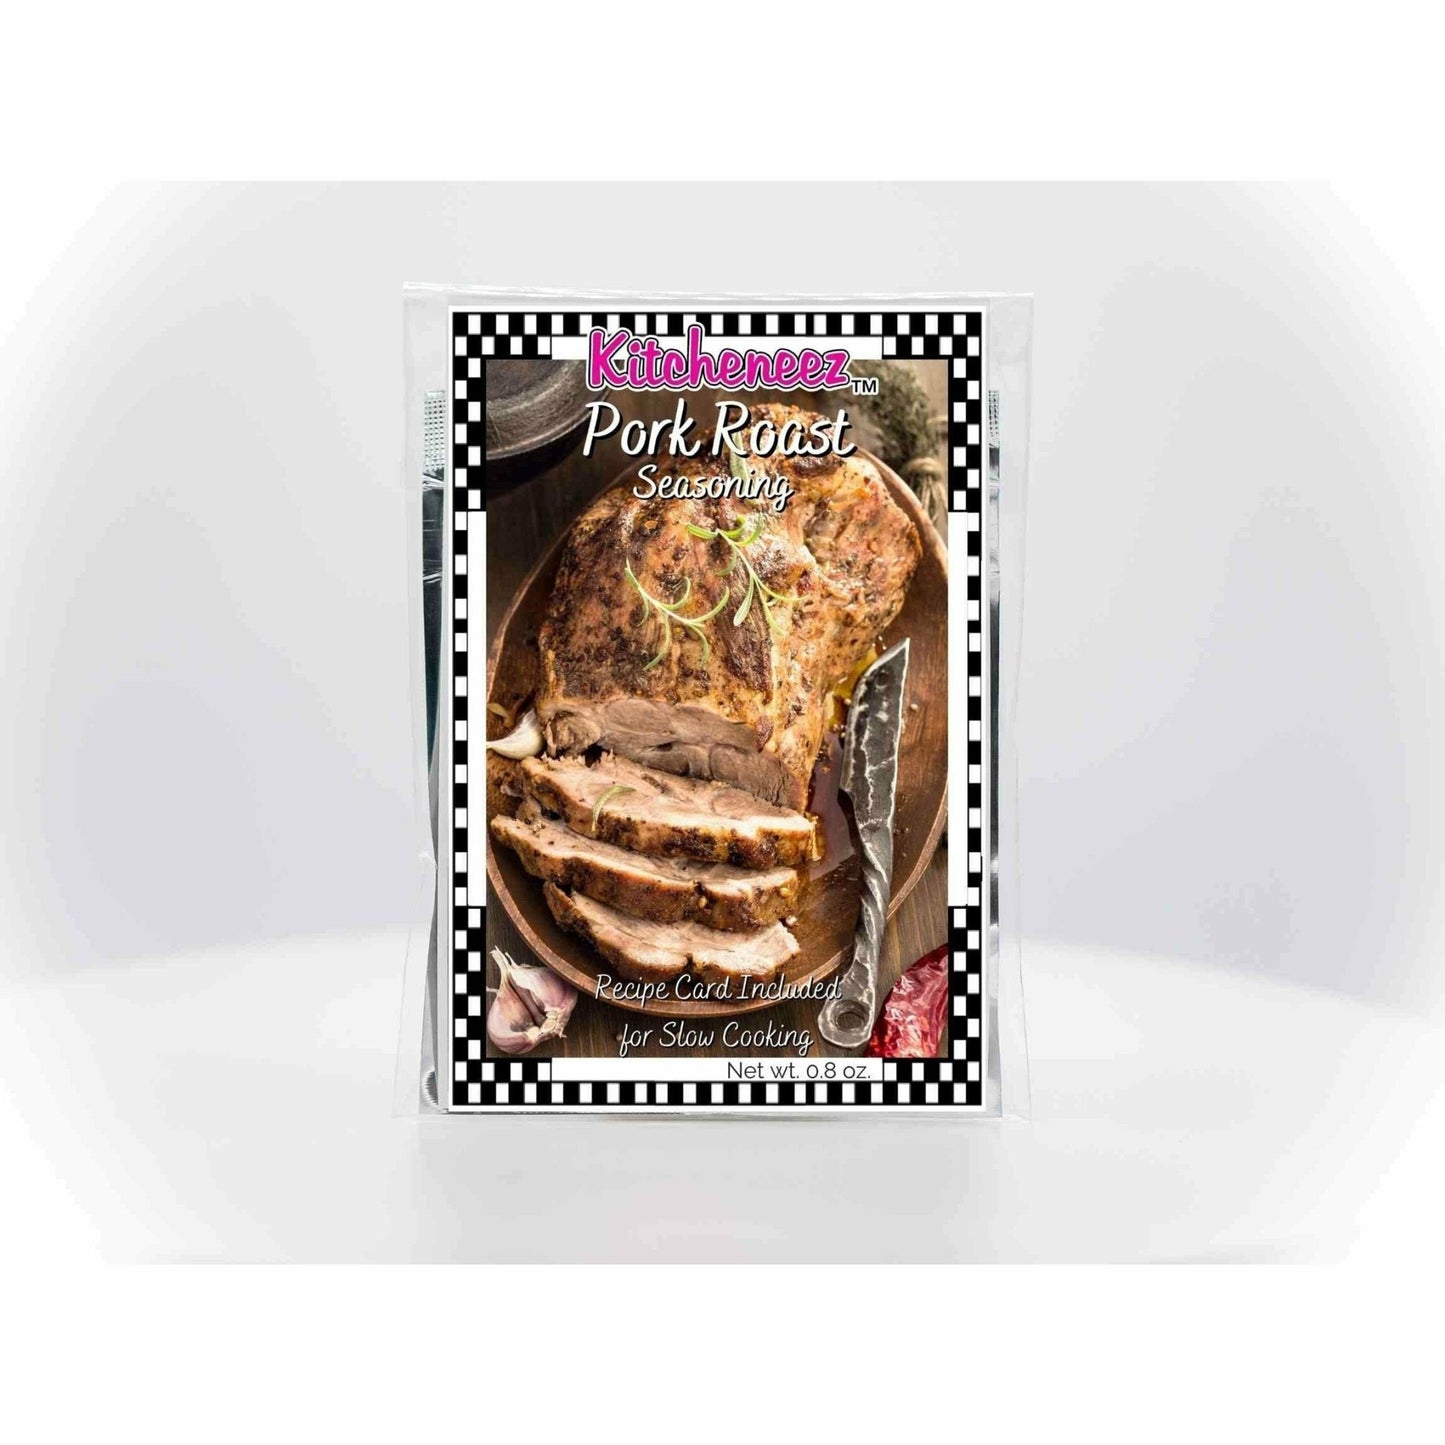 PRE-ORDER Pork Roast Seasoning - Kitcheneez Mixes & More!